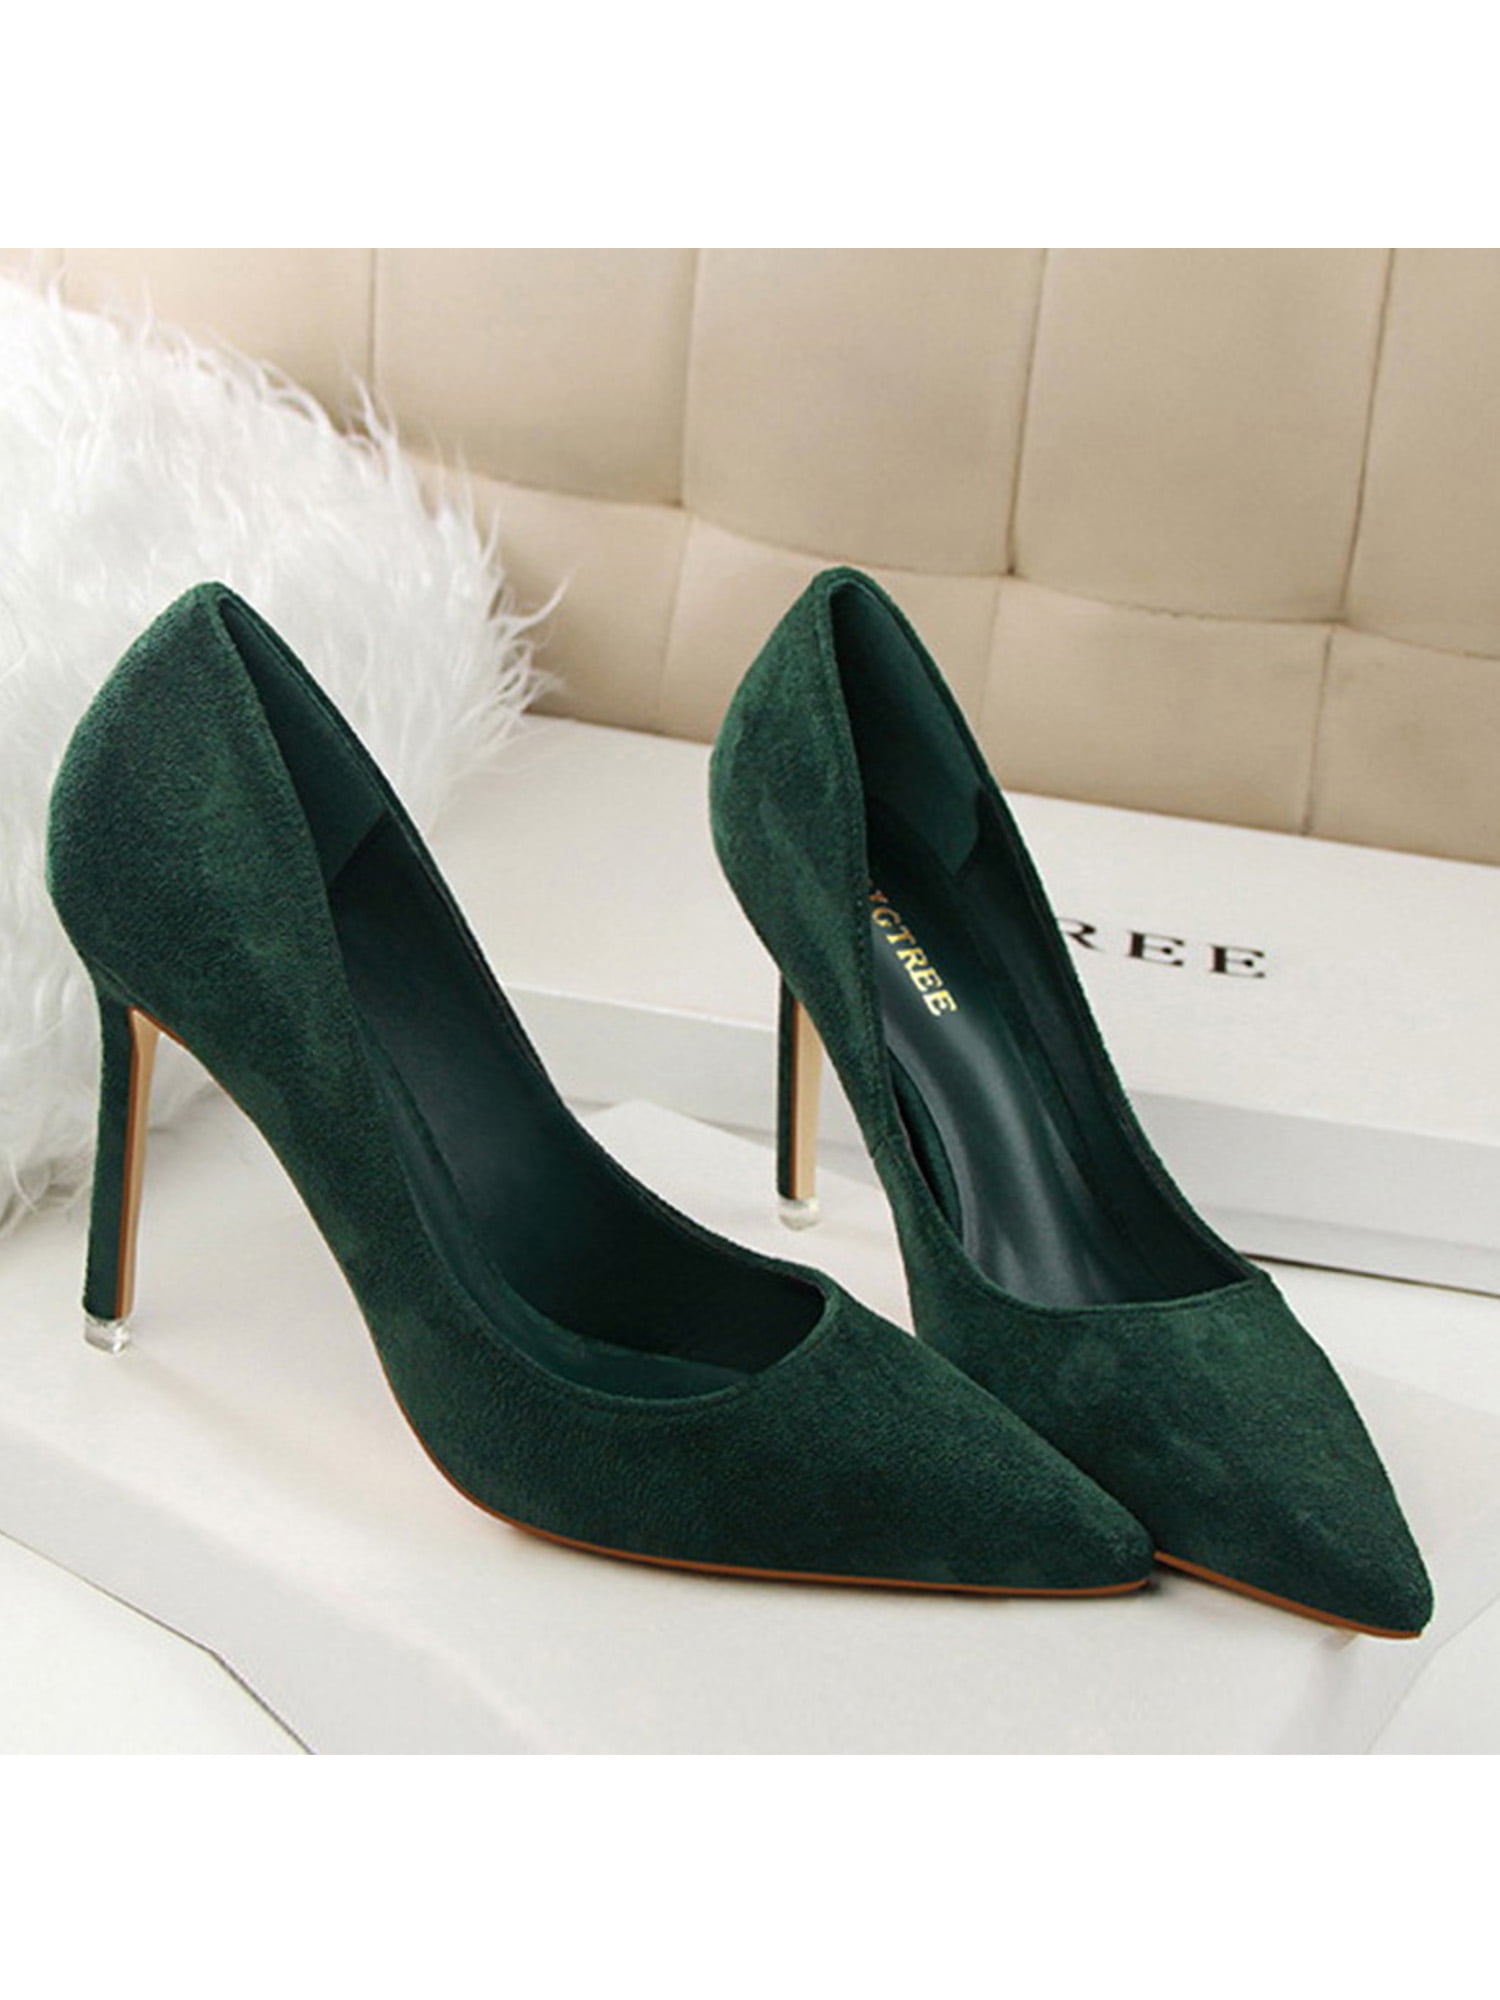 Pinterest | Green high heels, Green heels, Fashion shoes heels